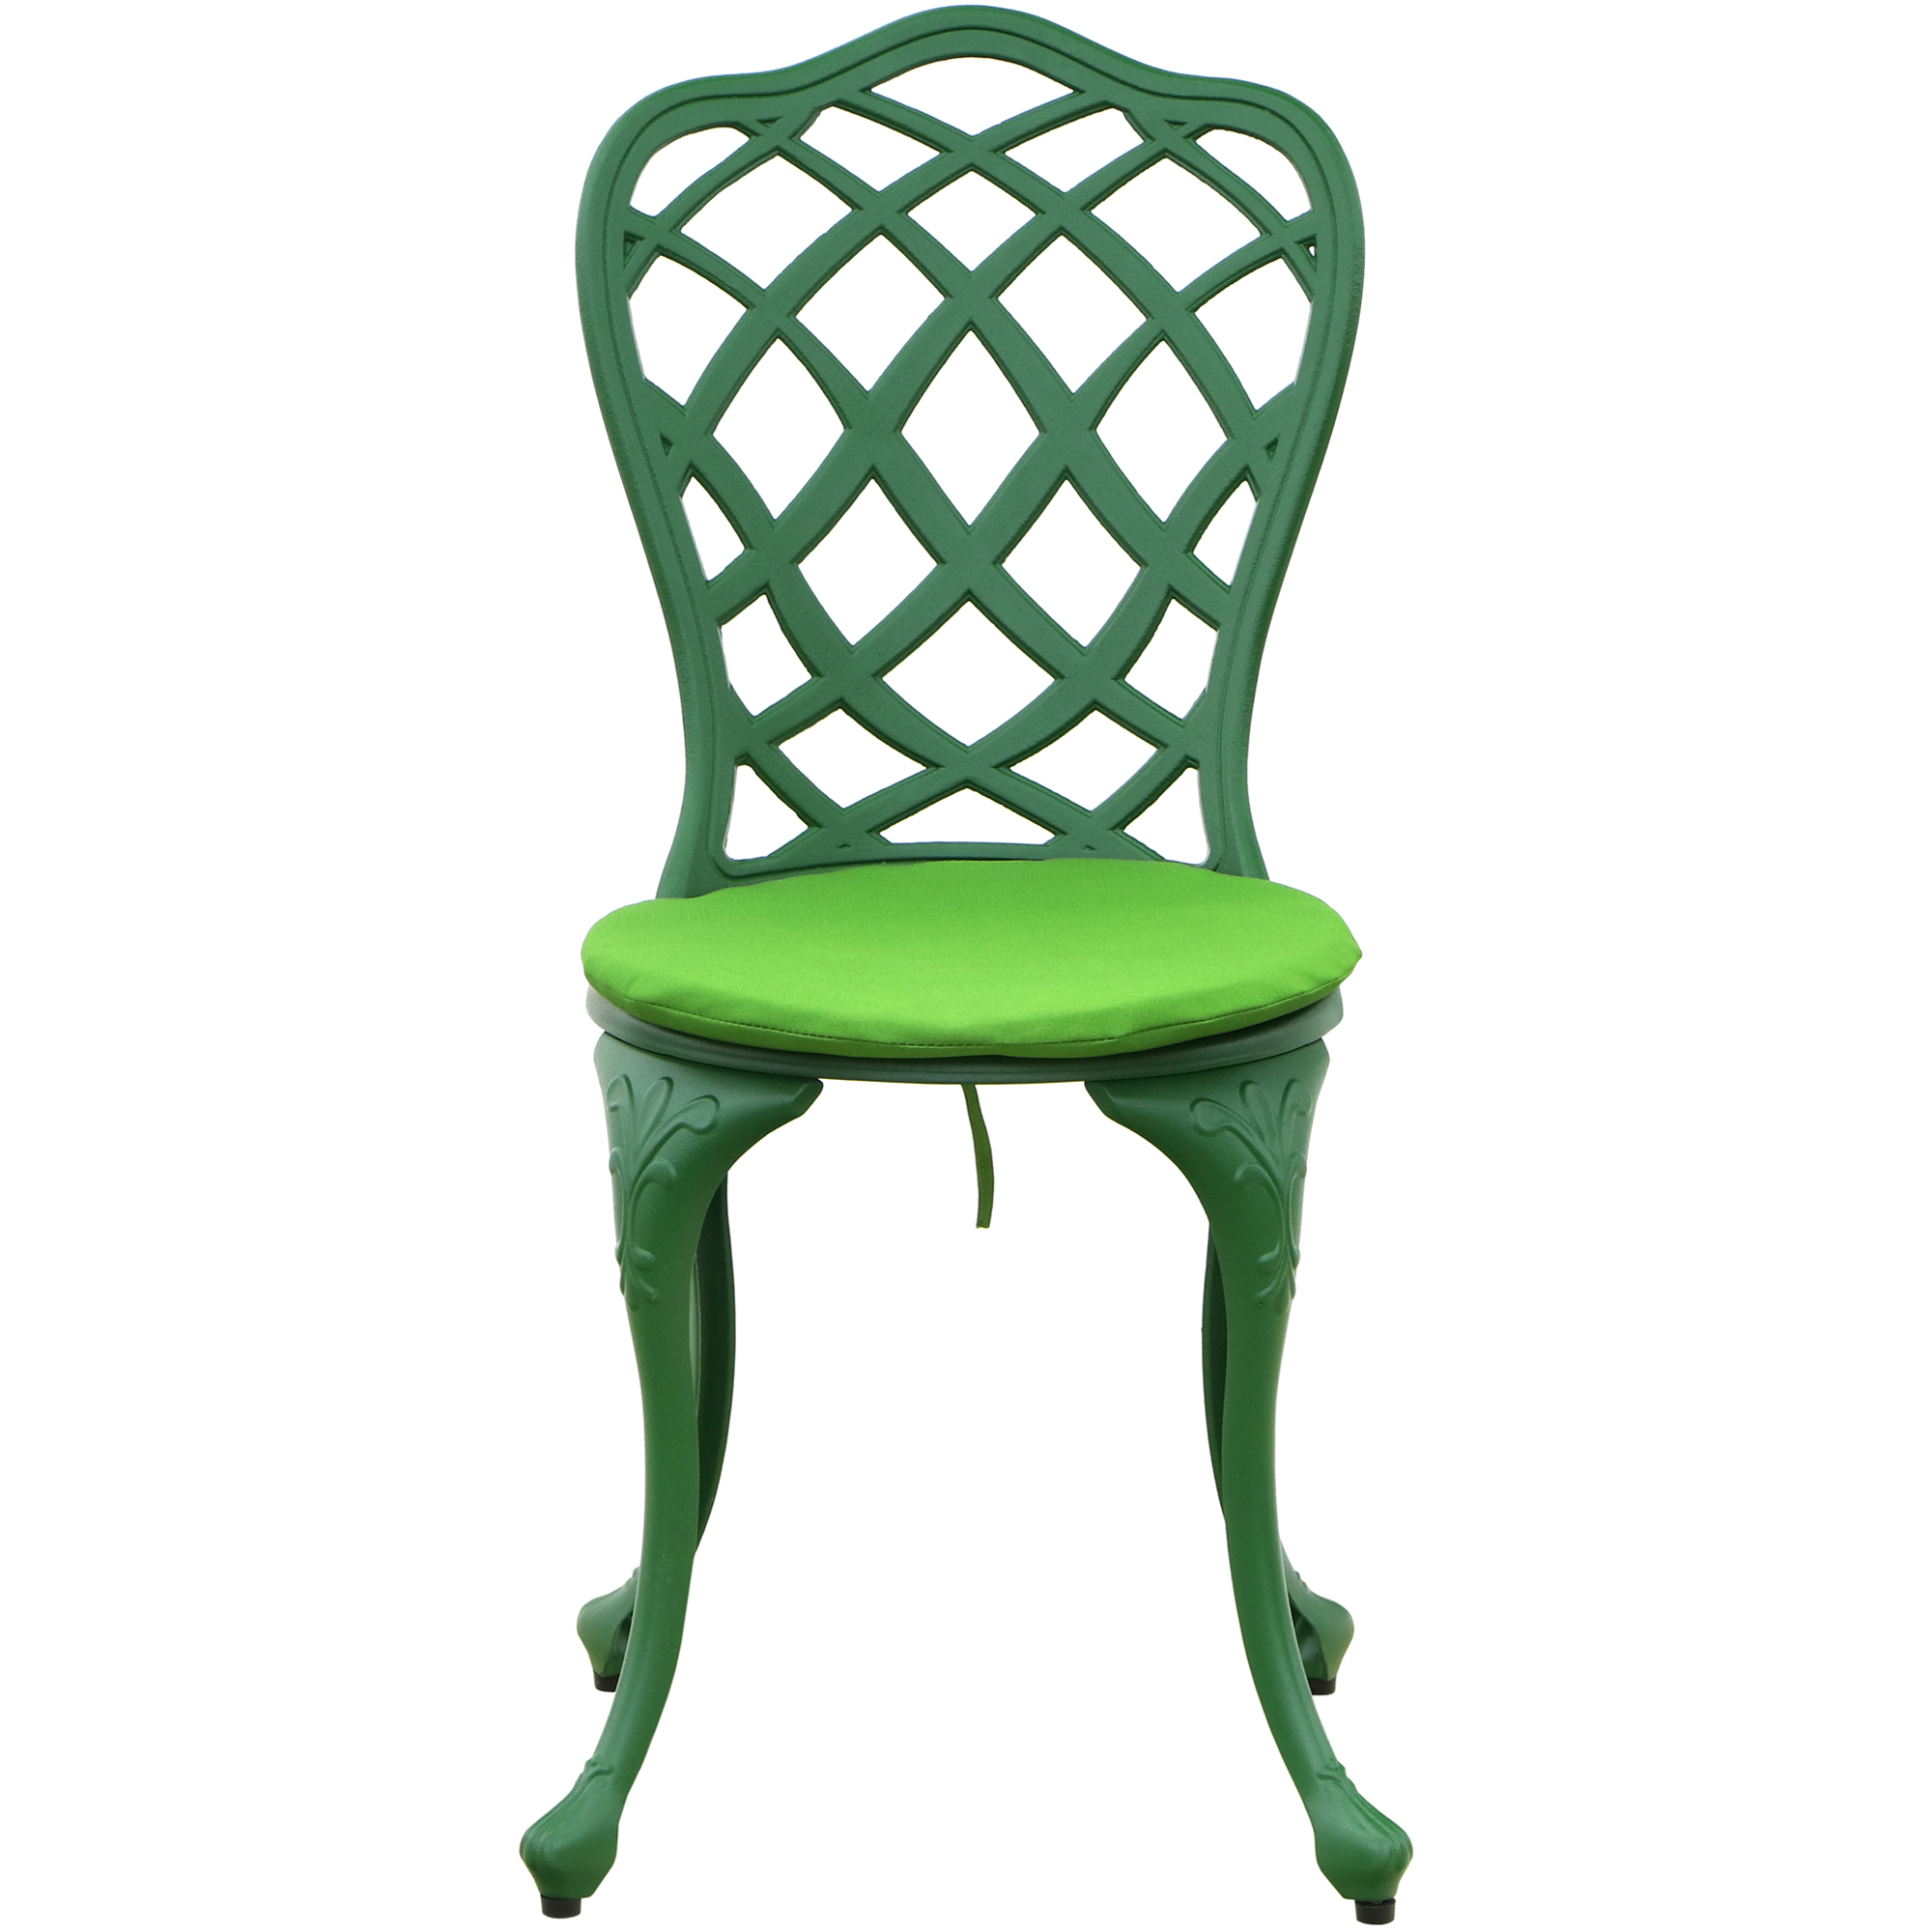 Комплект мебели Linyi 3 предмета, цвет зеленый, размер 60,5х60,5х66 см - фото 4